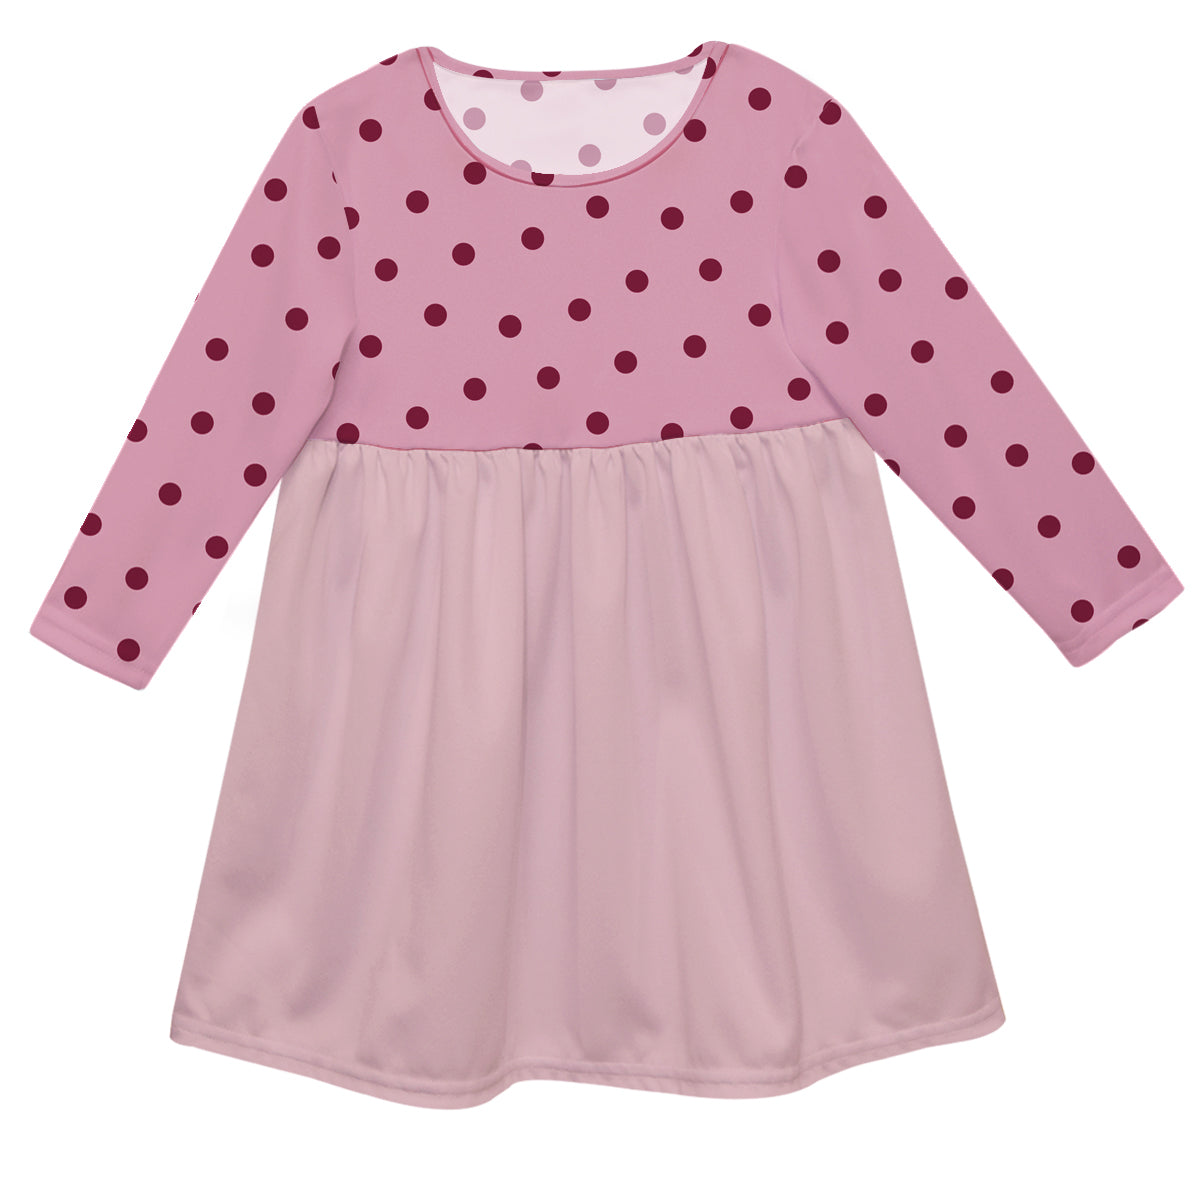 Girls pink polka dots dress - Wimziy&Co.